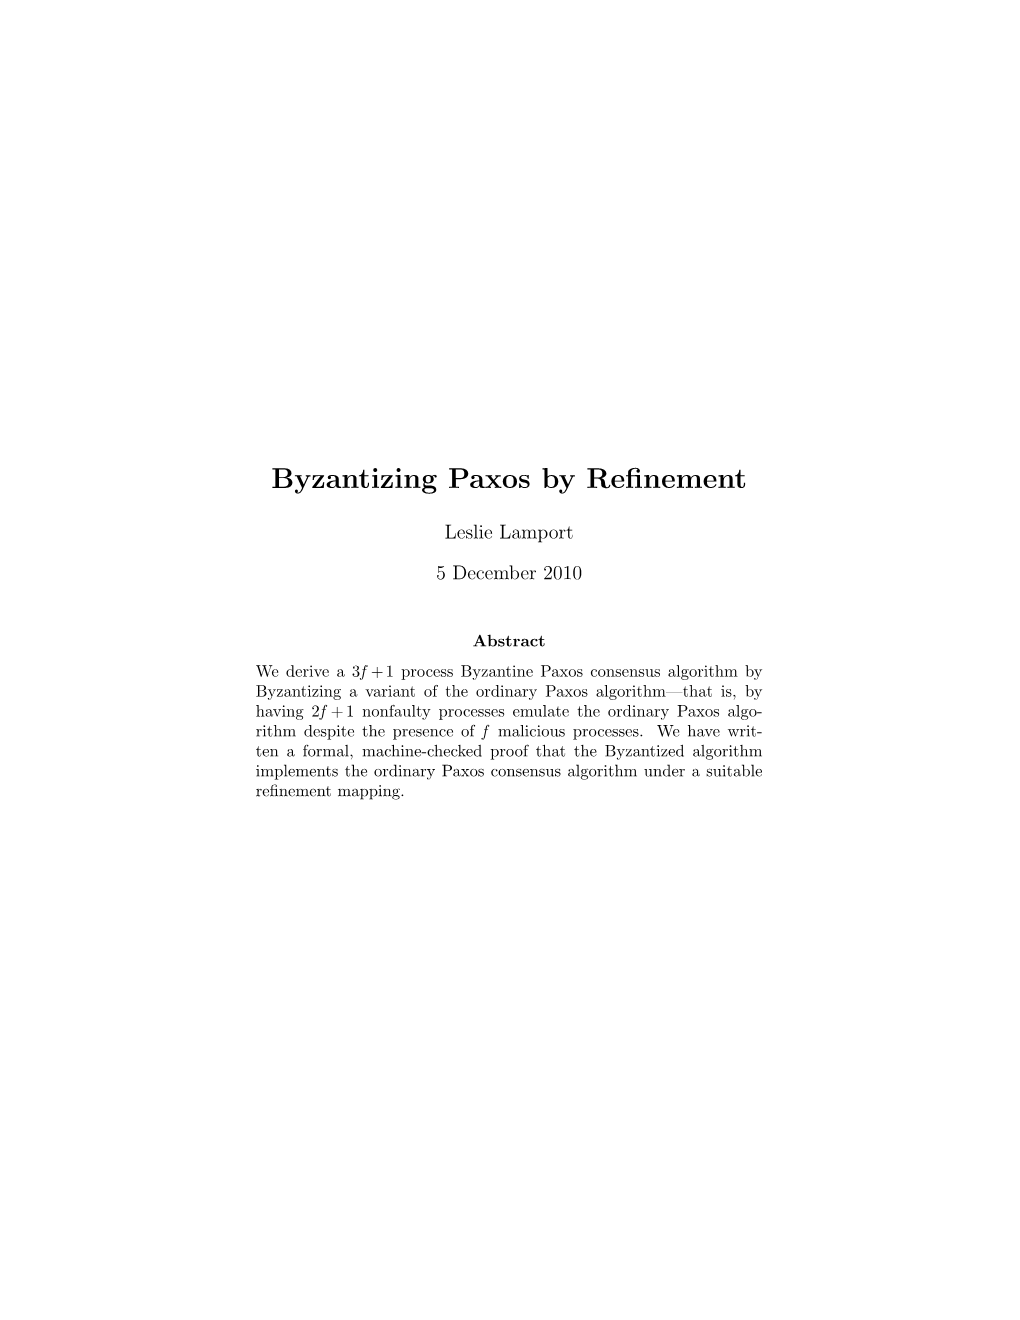 Byzantizing Paxos by Refinement